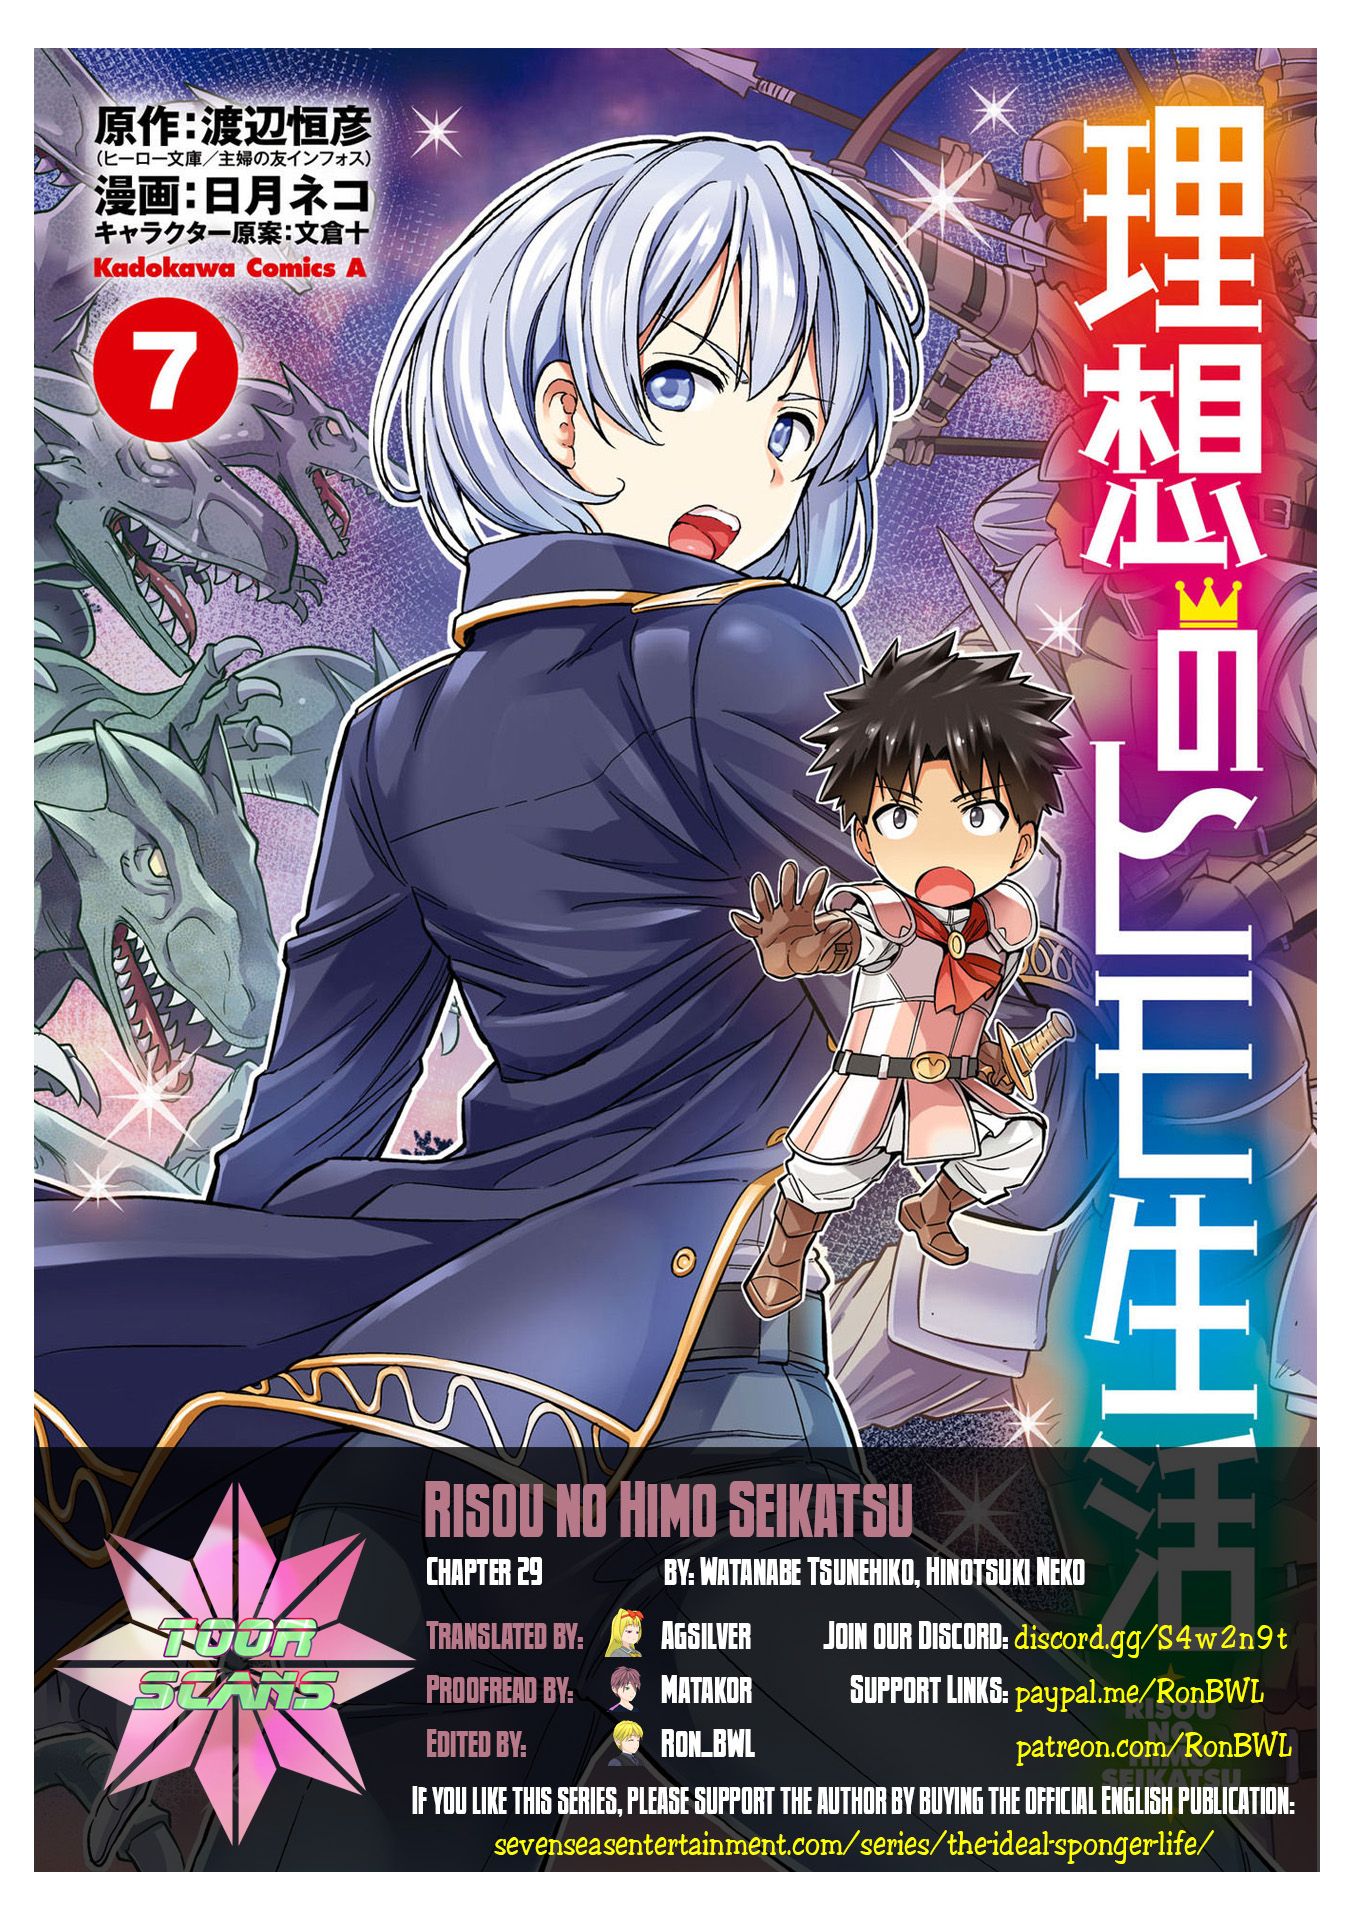 Hyakuren no Haou to Seiyaku no Ikusa Otome Manga - Chapter 29 - Manga Rock  Team - Read Manga Online For Free